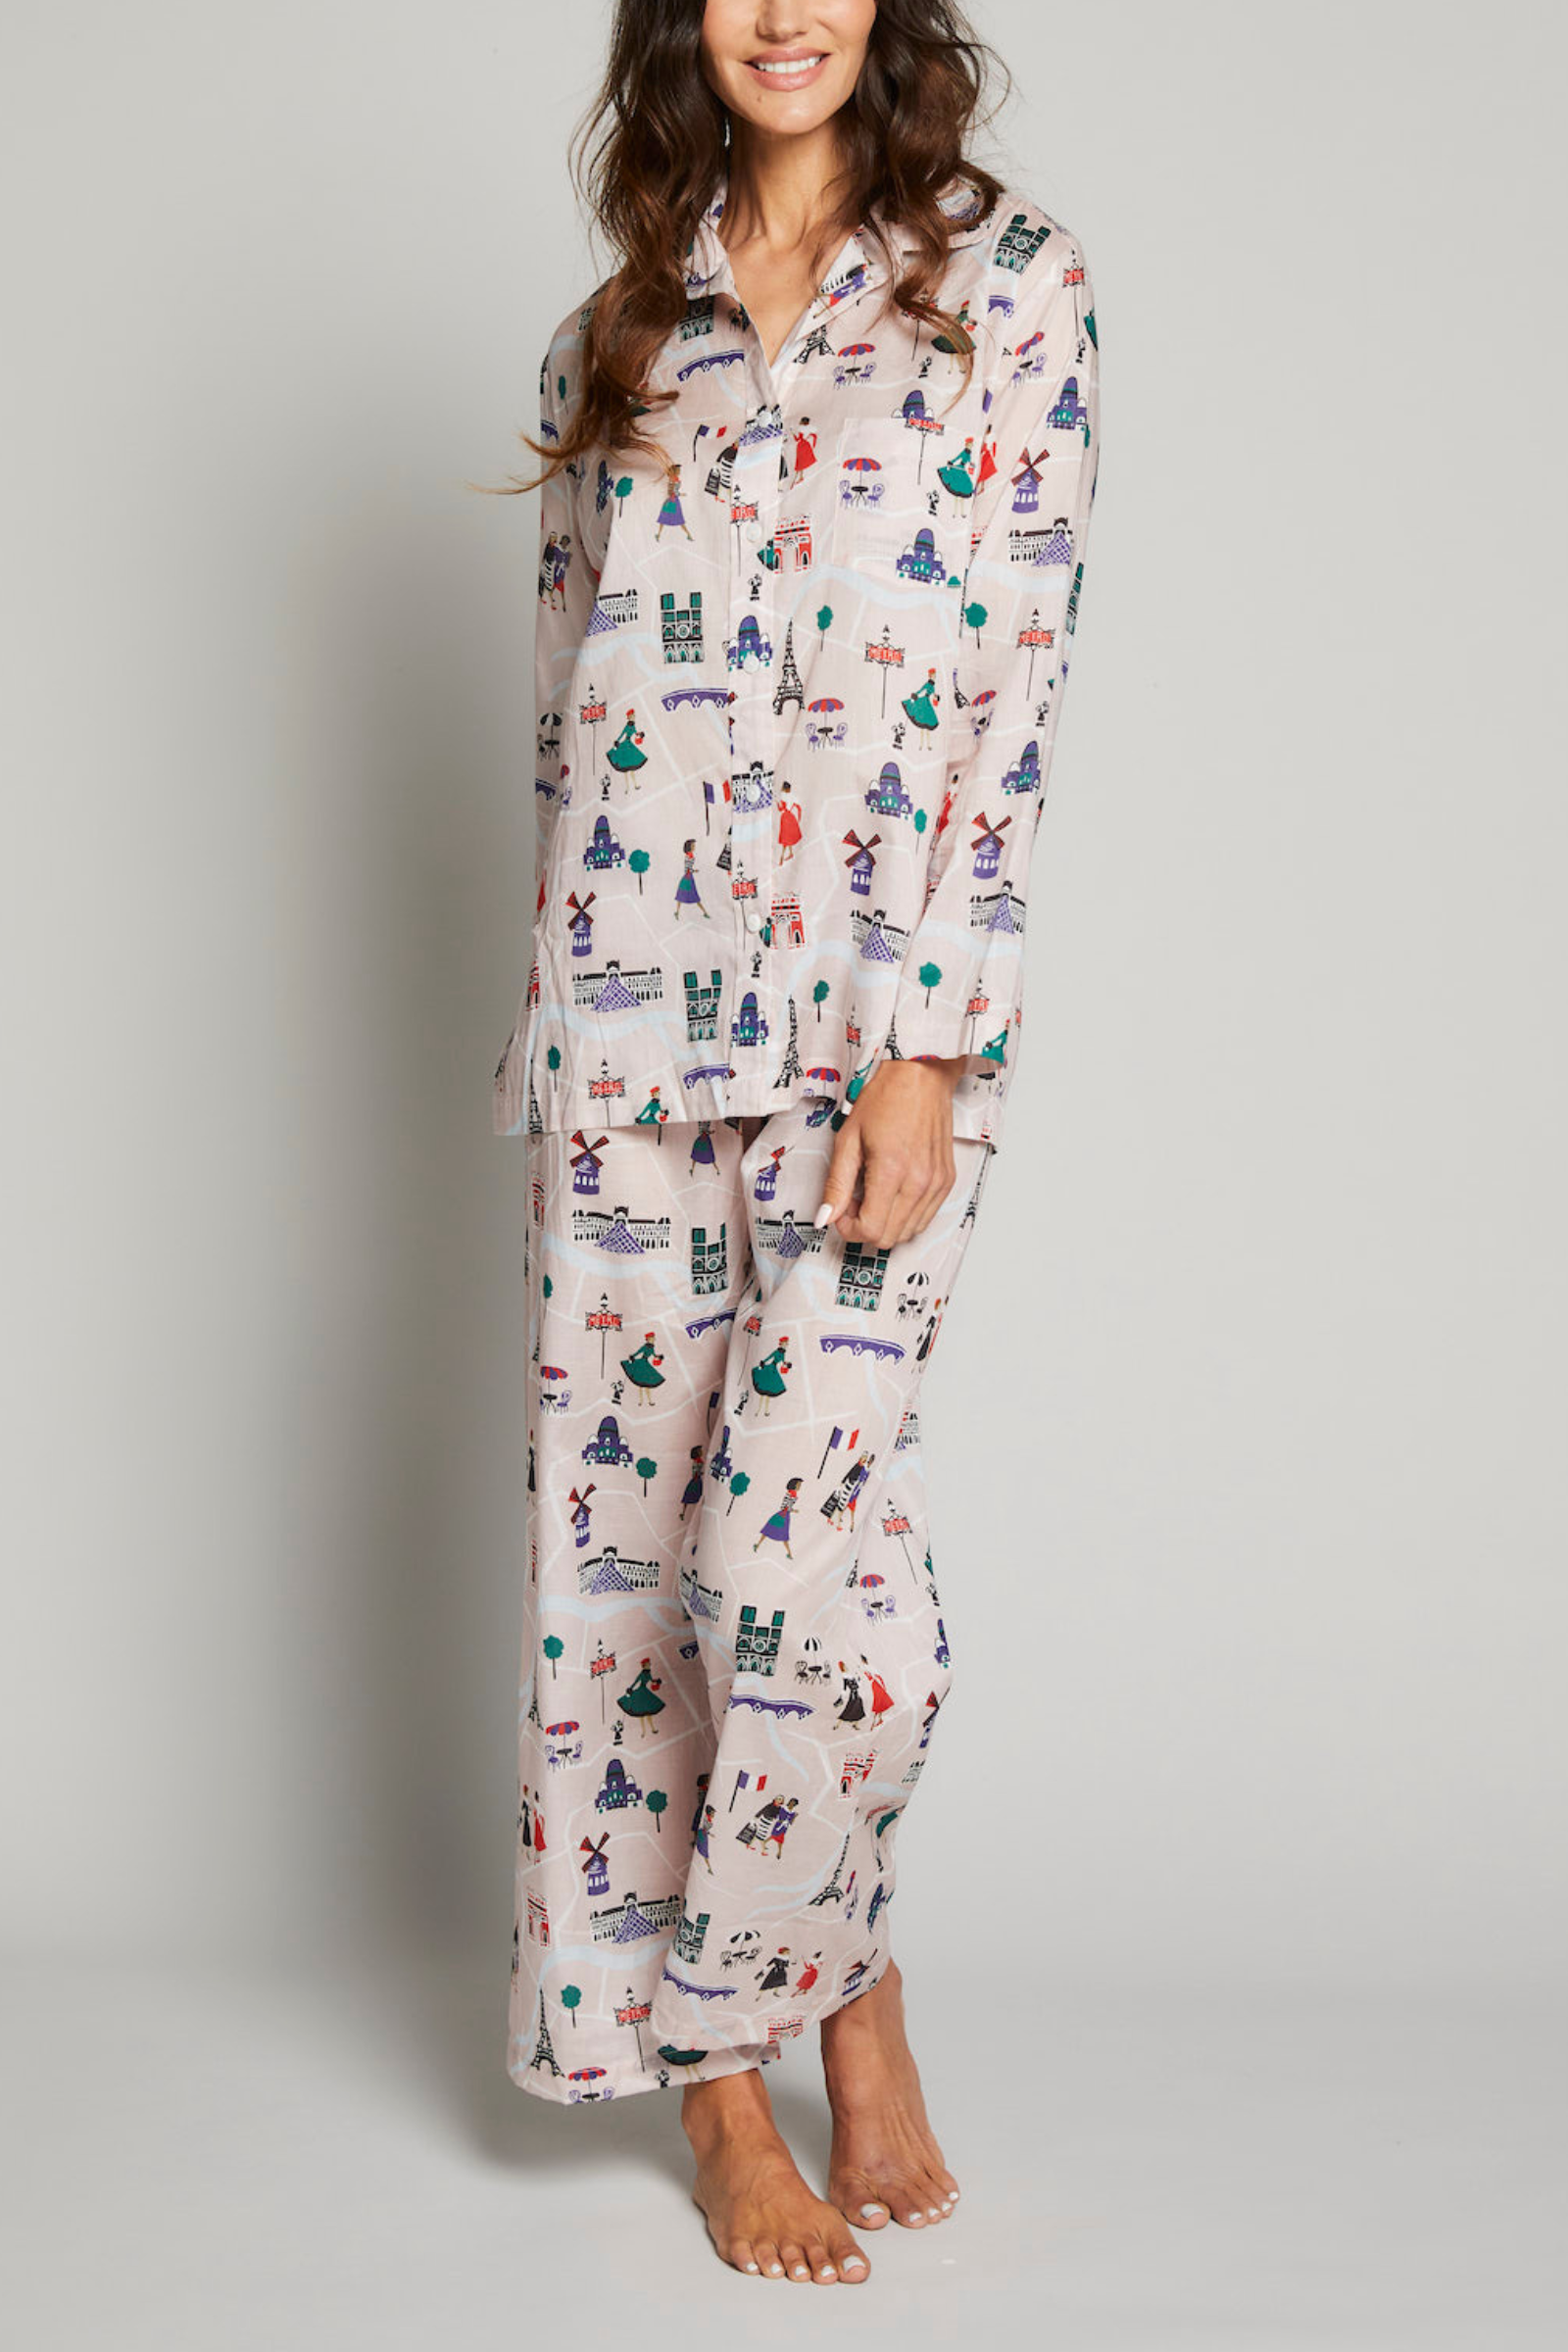 Pierre Donna Women's Cotton Pajama set With Pants - Women